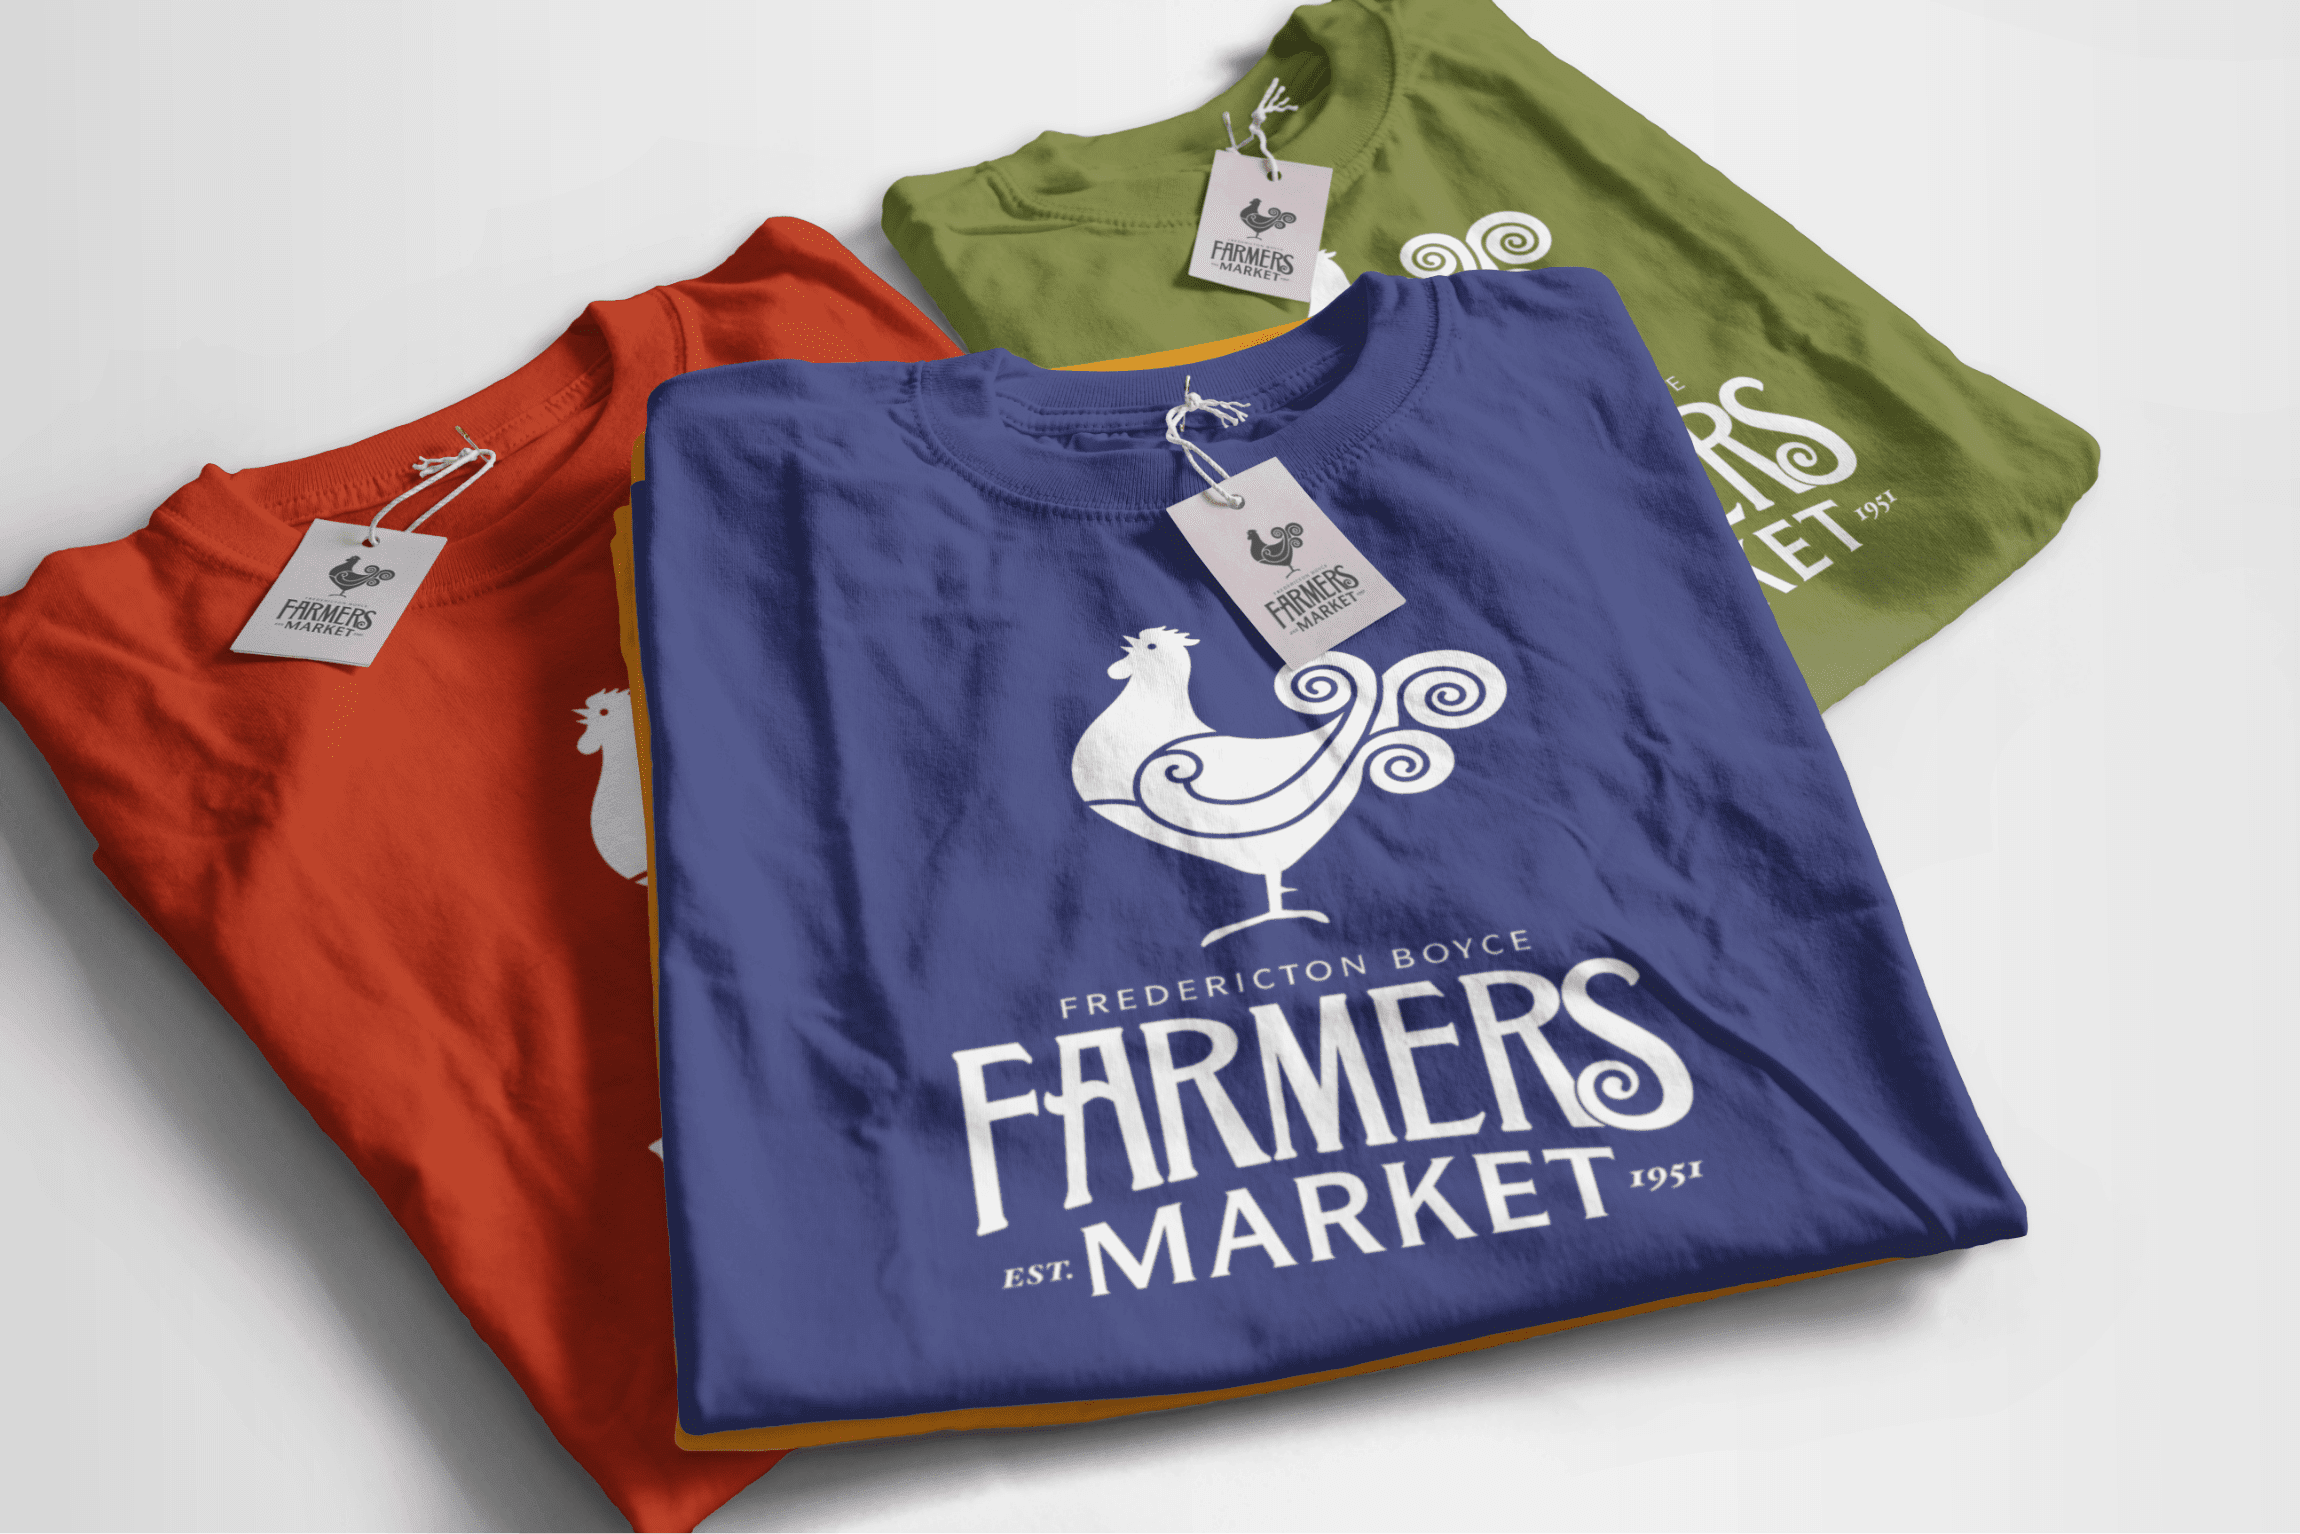 Farmers Market Shirts